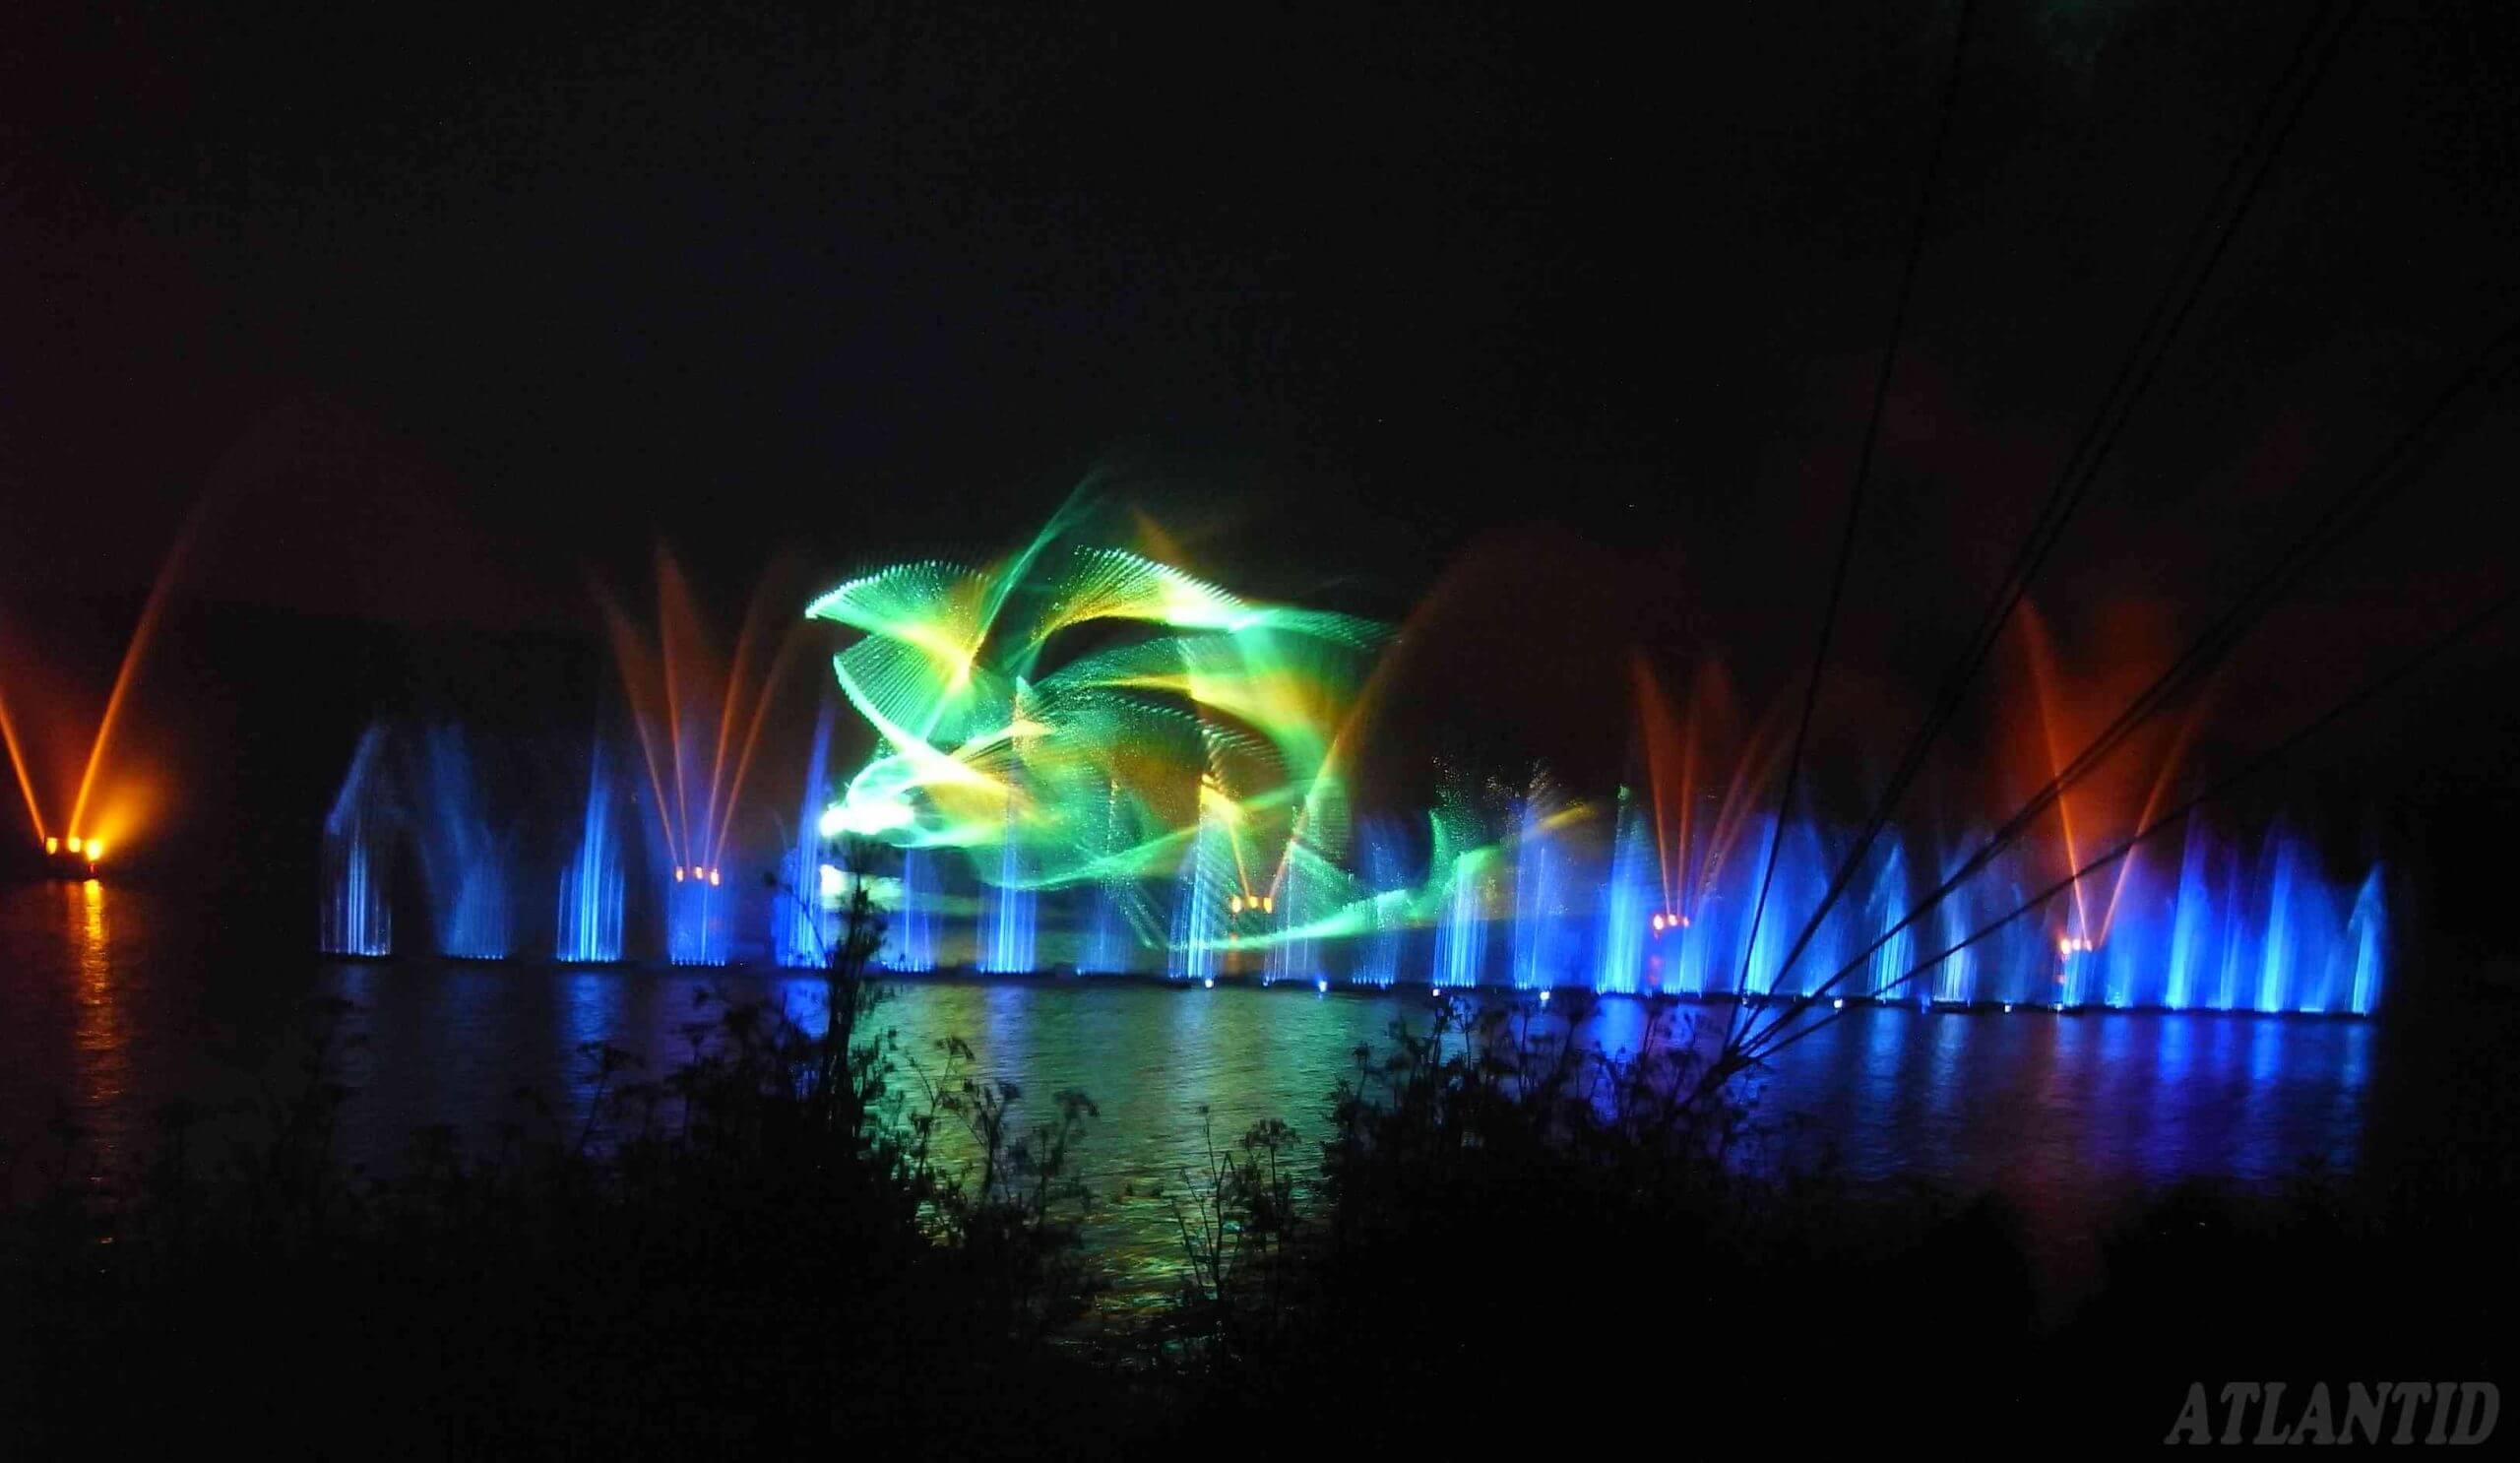 Atlantid - Show aquatique avec projection de lasers multicolores